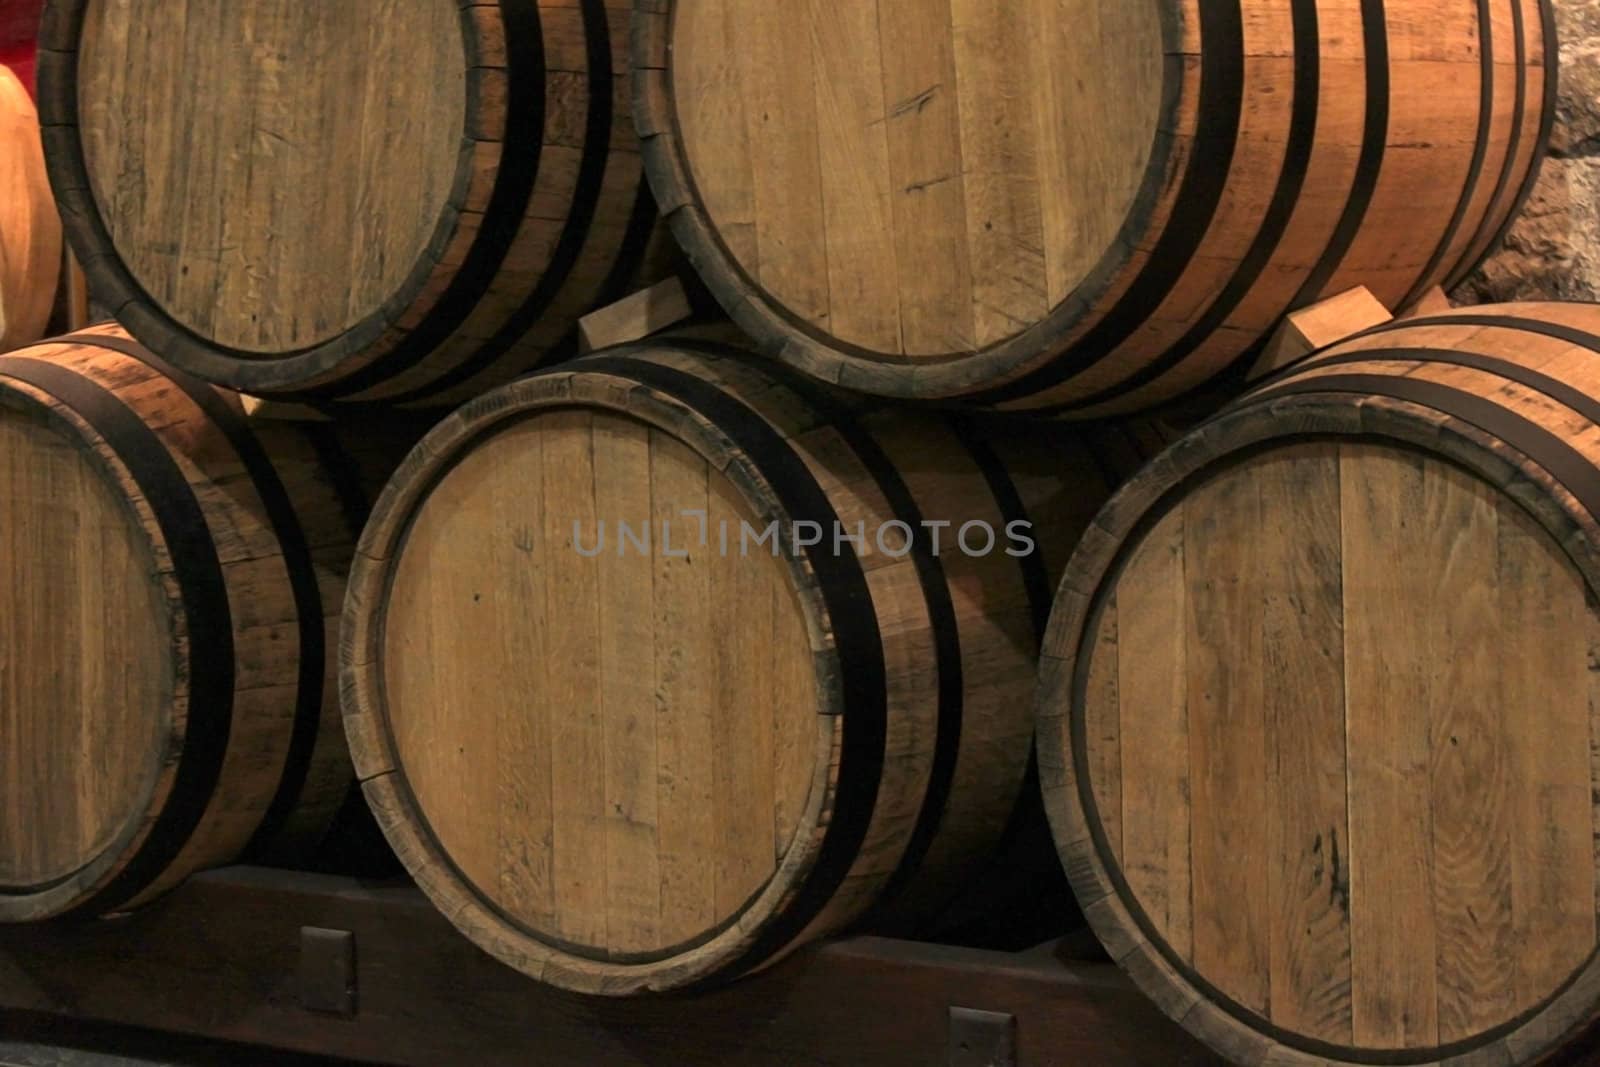 wine barrels in vineyard